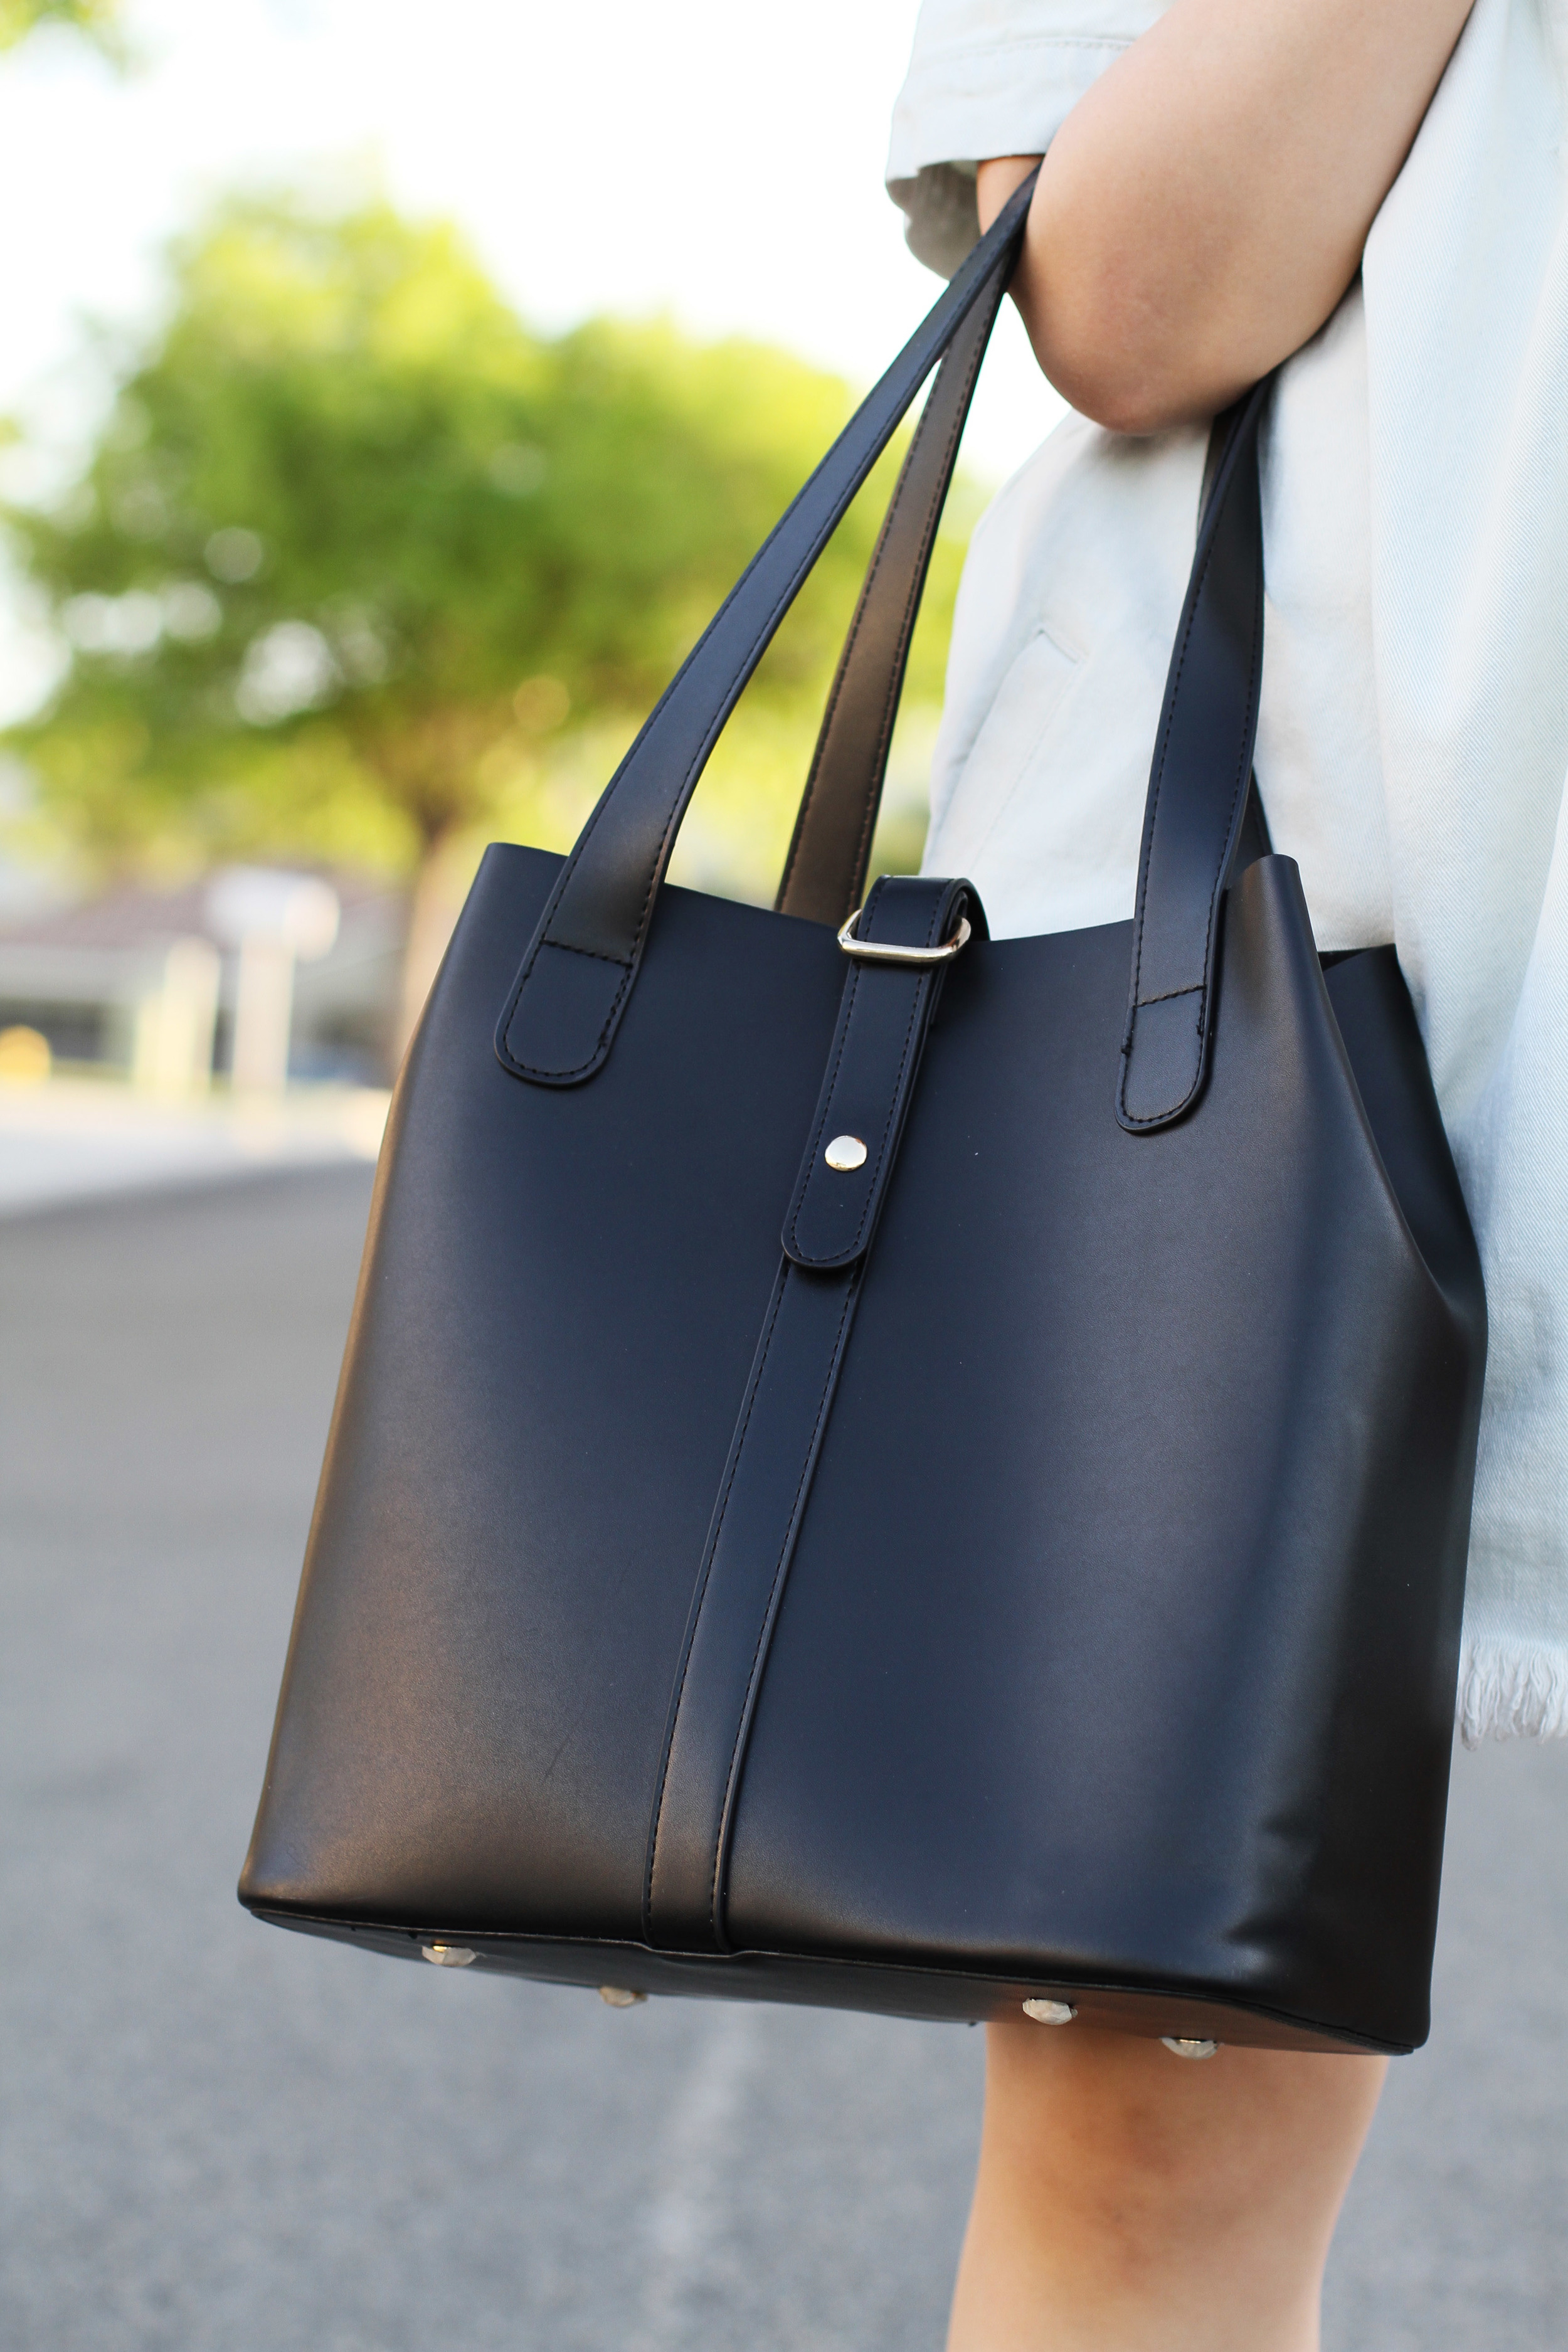 Ms littles bag black leather tote7.jpg